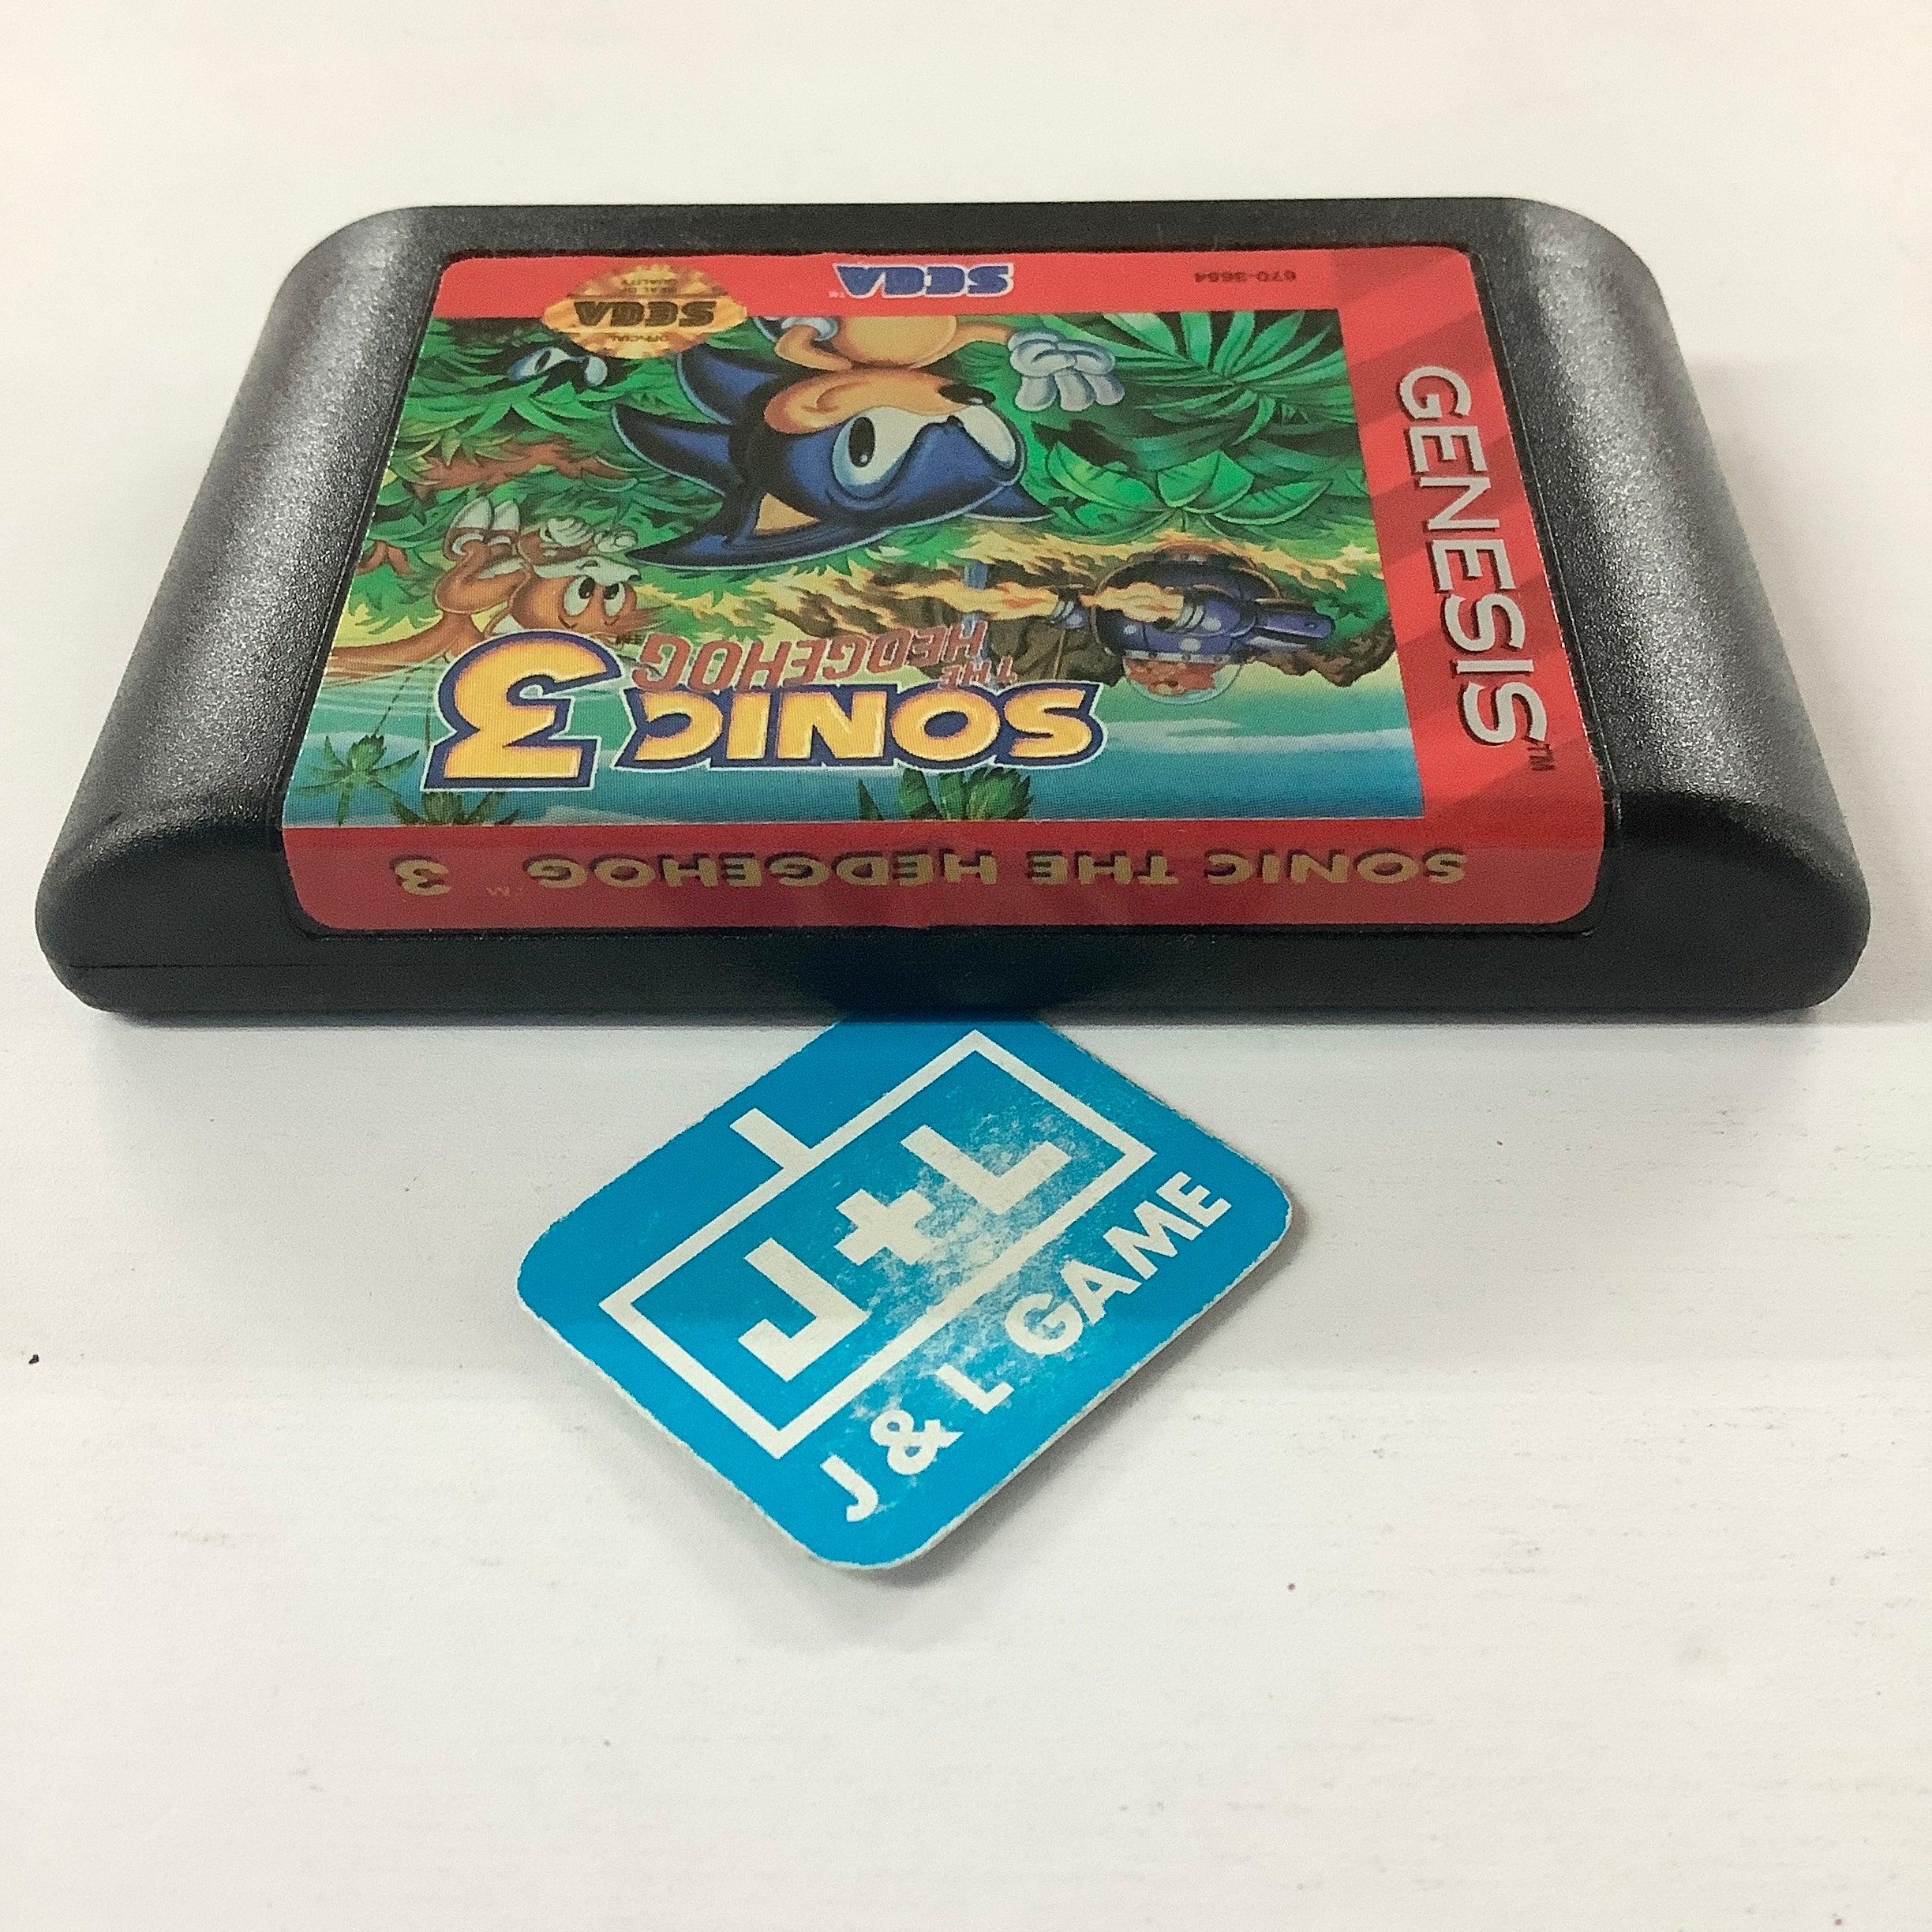 Sonic the Hedgehog 3 - (SG) SEGA Genesis [Pre-Owned] Video Games Sega   